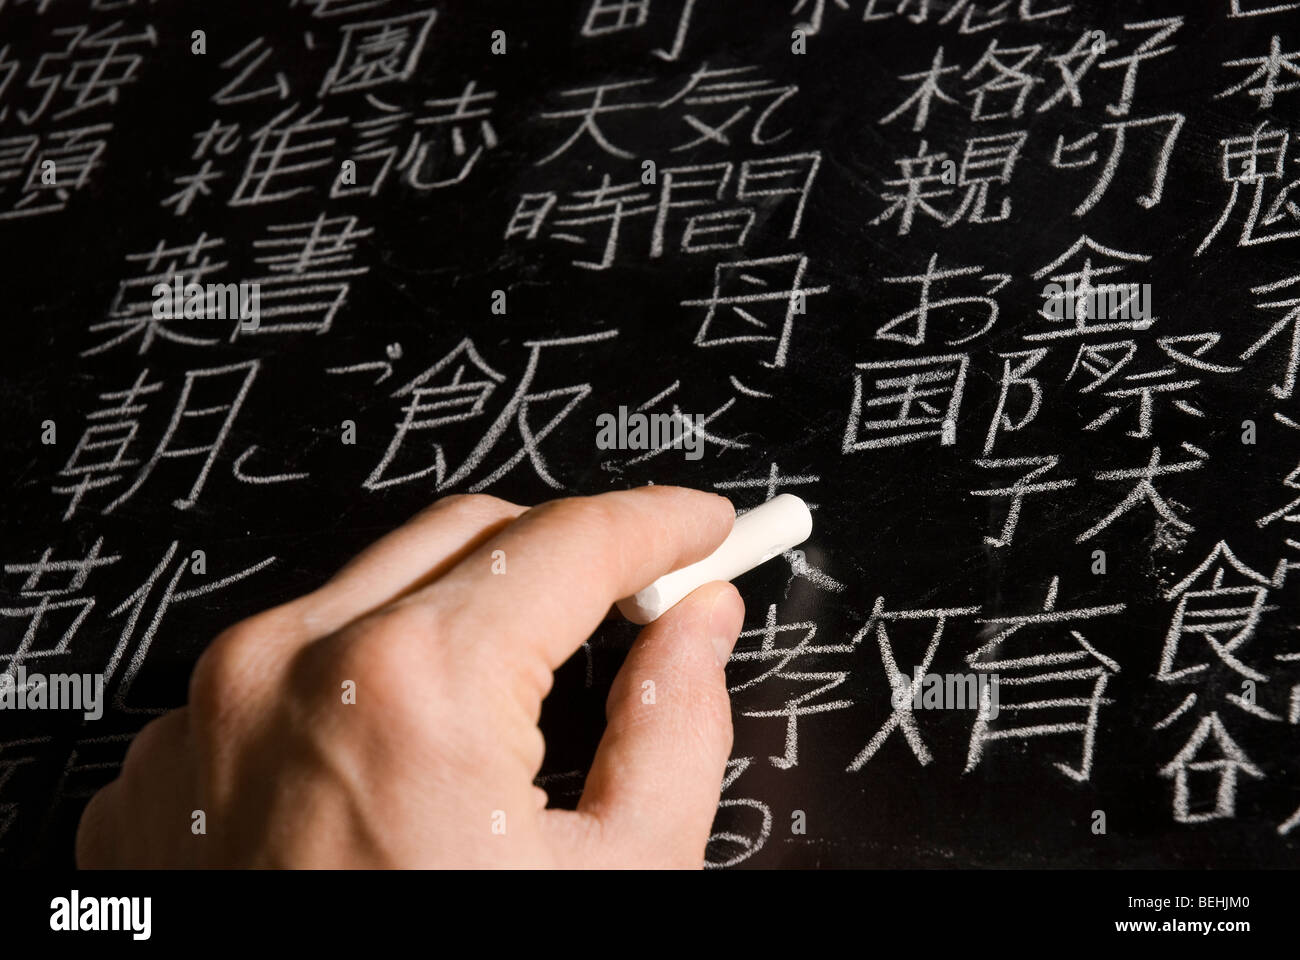 Chalk written kanji characters showing random words. Stock Photo